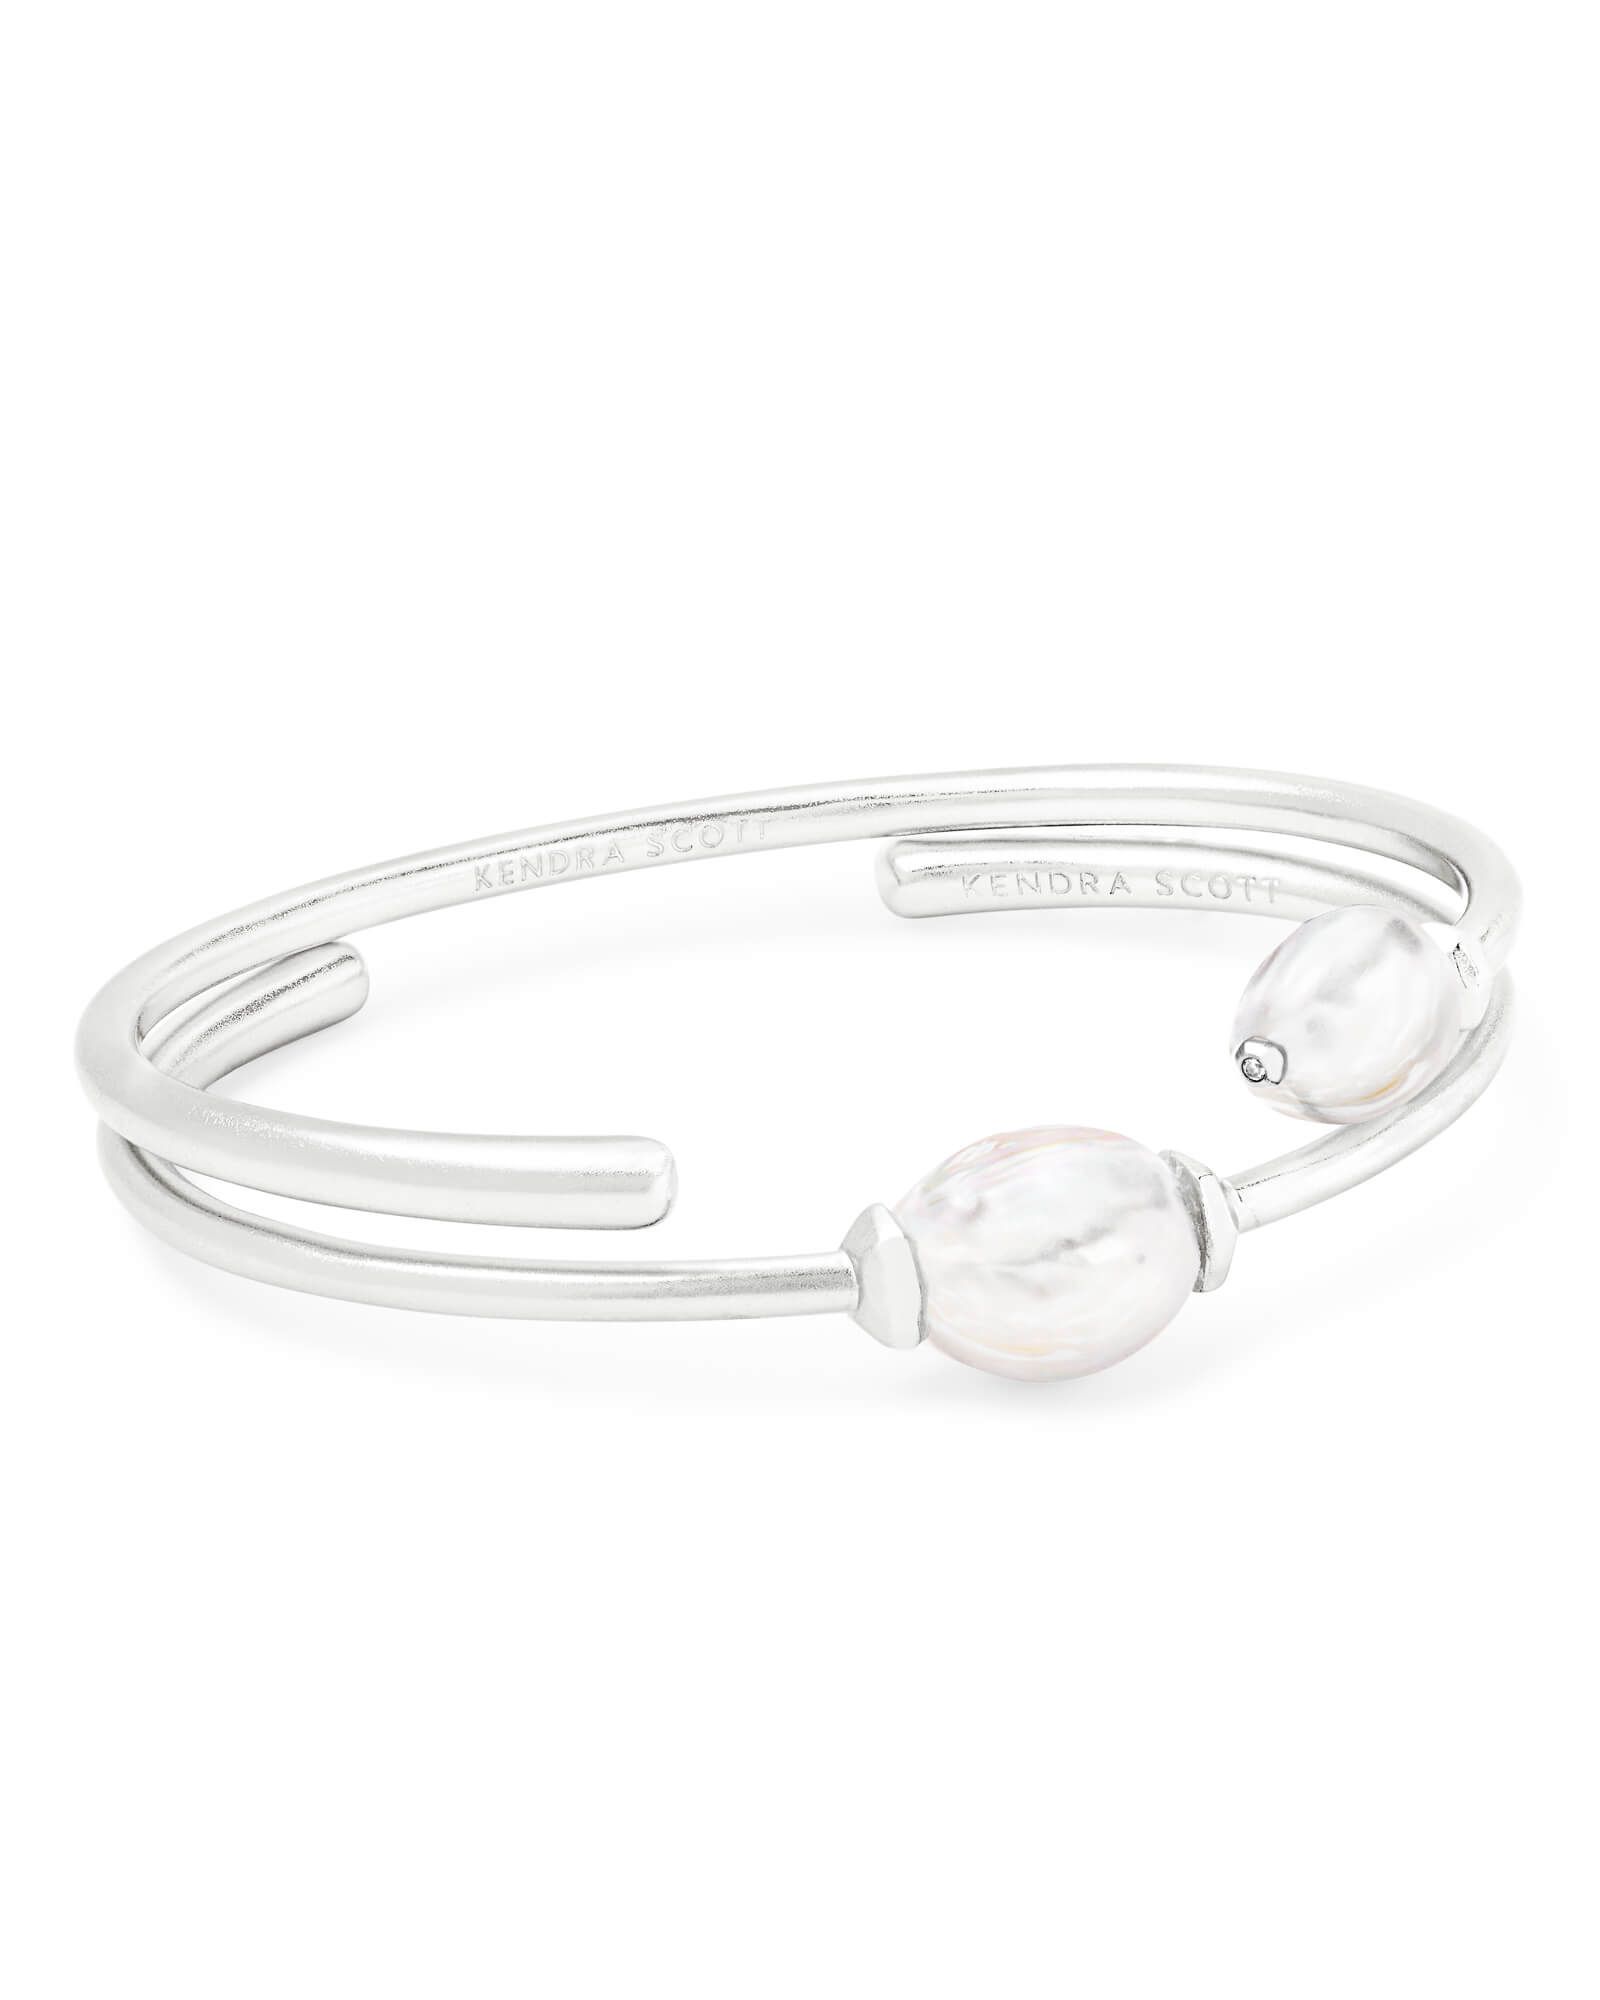 Amiya Bright Silver Cuff Bracelet in Pearl | Kendra Scott